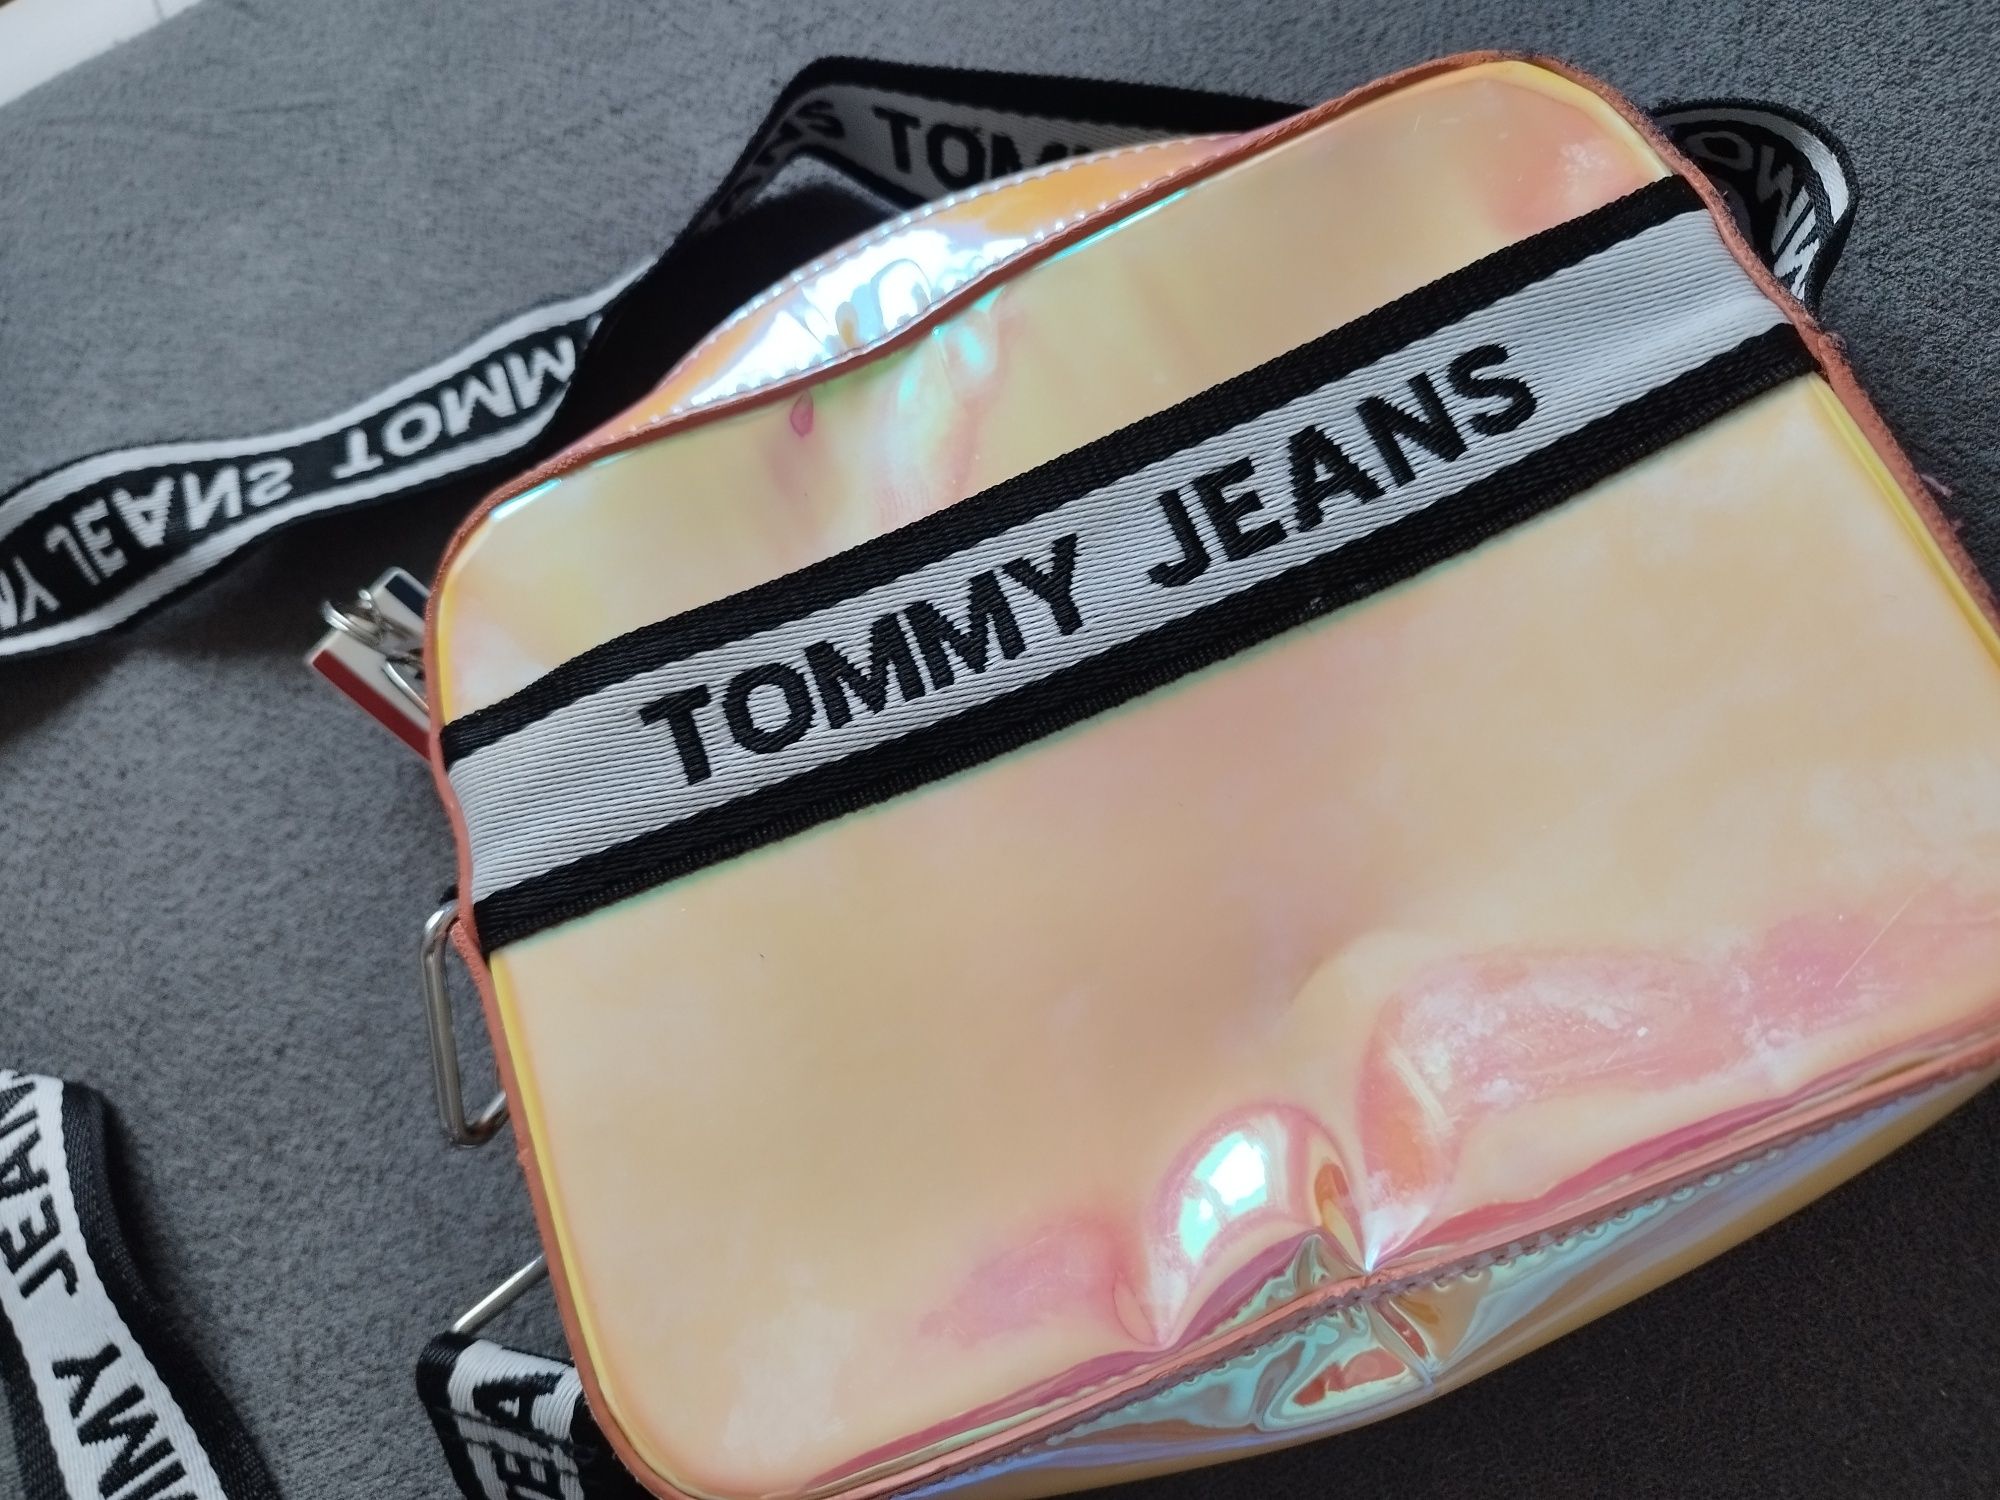 Tommy jeans neonowa torebka damska